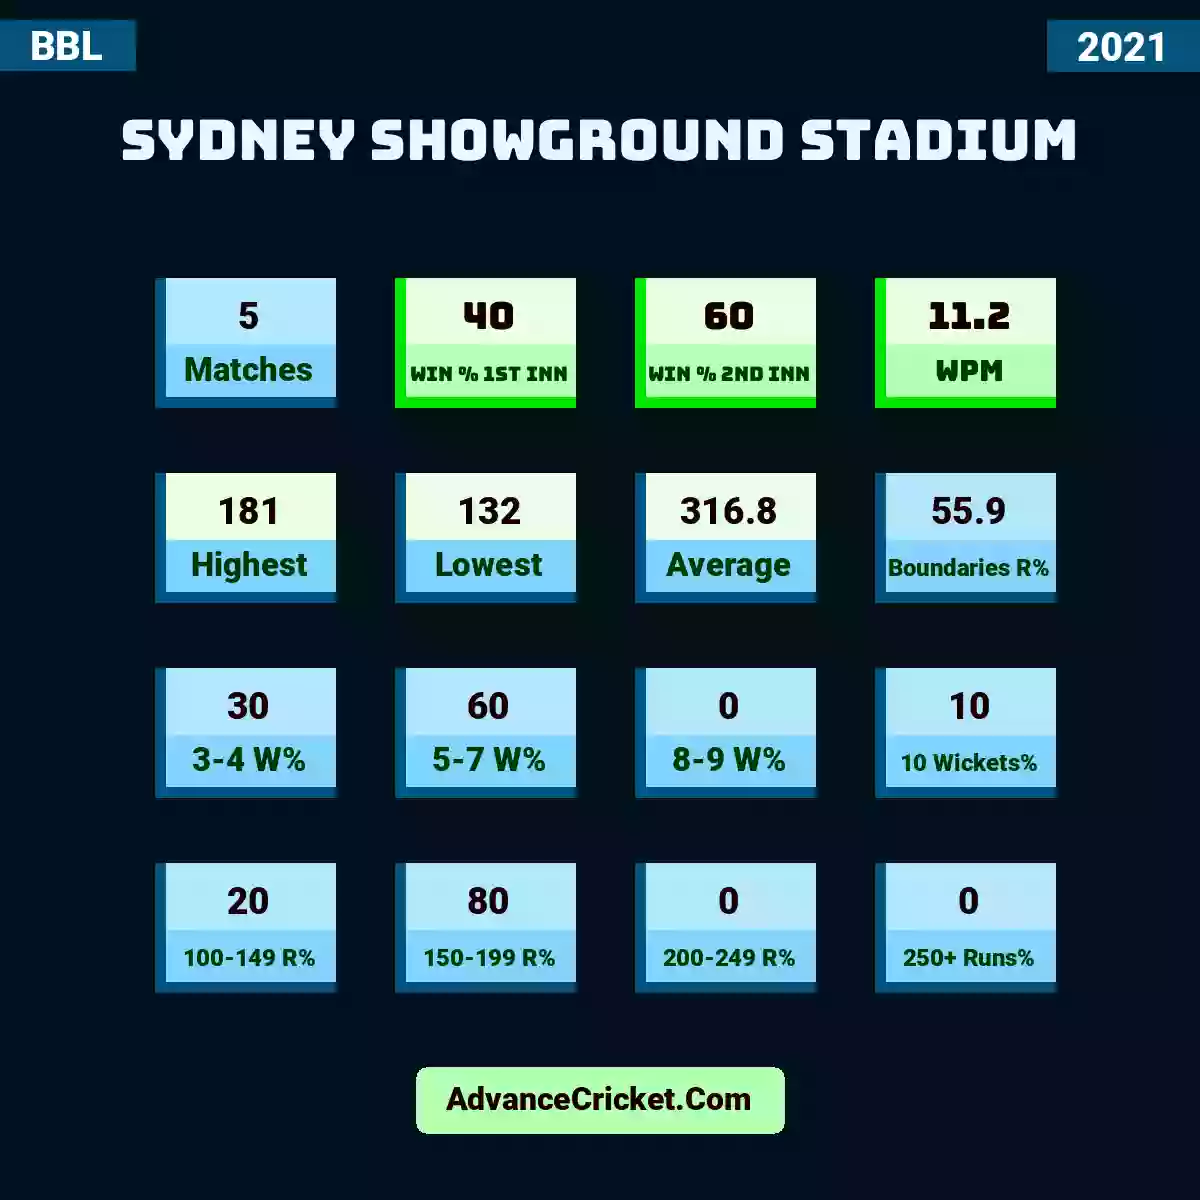 Image showing Sydney Showground Stadium with Matches: 5, Win % 1st Inn: 40, Win % 2nd Inn: 60, WPM: 11.2, Highest: 181, Lowest: 132, Average: 316.8, Boundaries R%: 55.9, 3-4 W%: 30, 5-7 W%: 60, 8-9 W%: 0, 10 Wickets%: 10, 100-149 R%: 20, 150-199 R%: 80, 200-249 R%: 0, 250+ Runs%: 0.